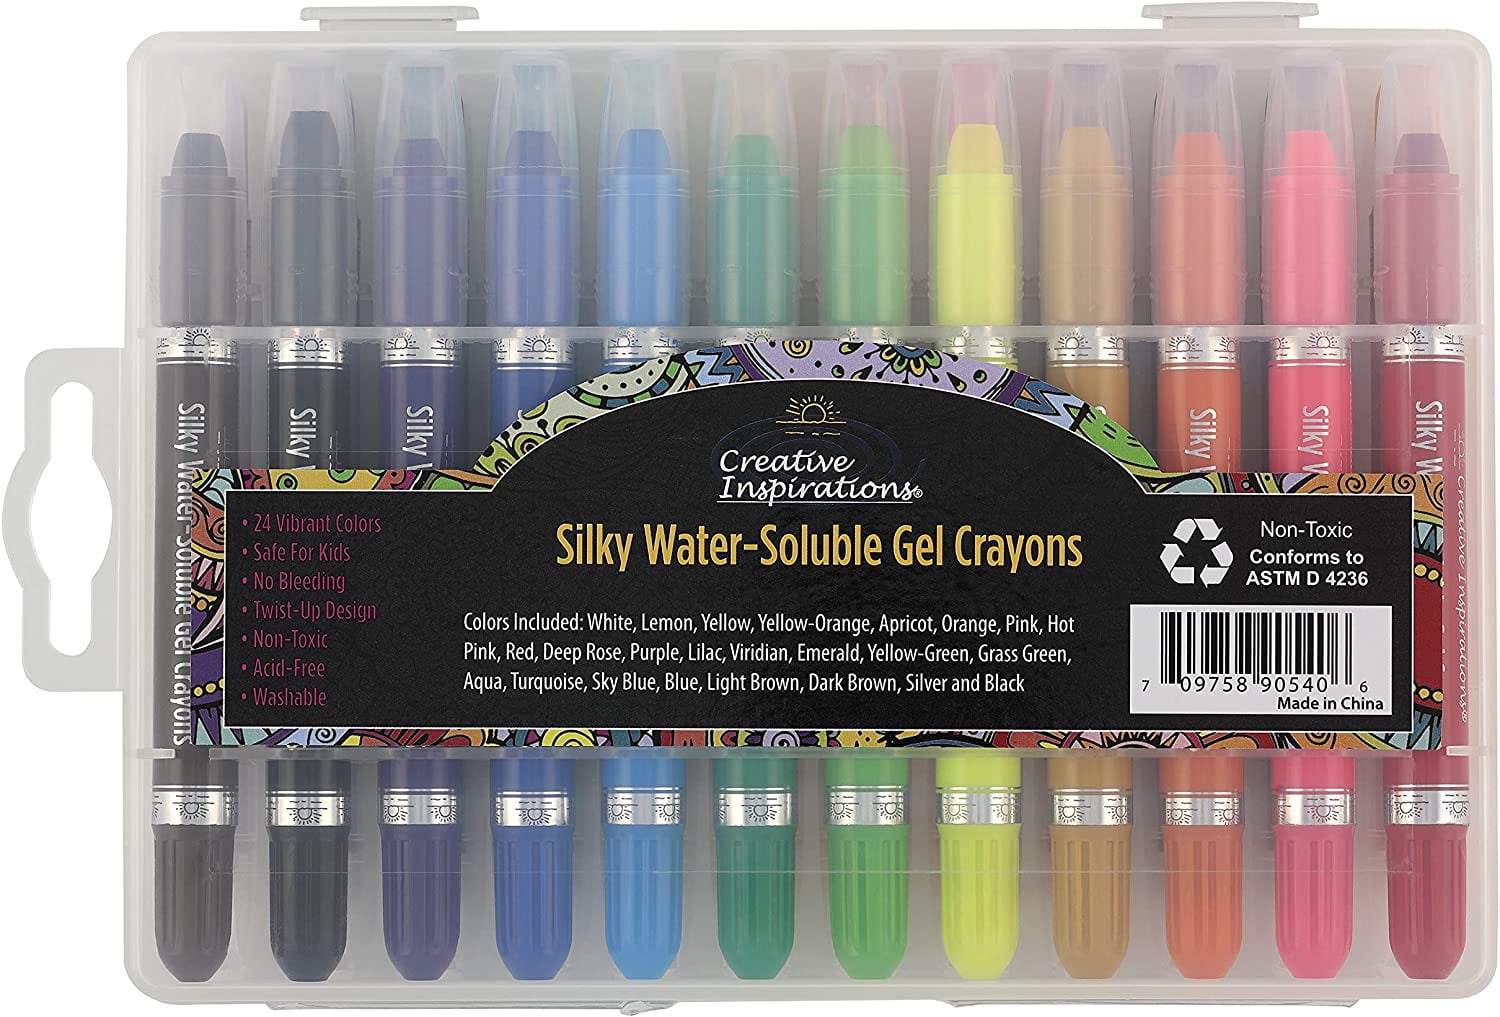 Mystery Metallics Gel Crayons – Sidekicks Travel